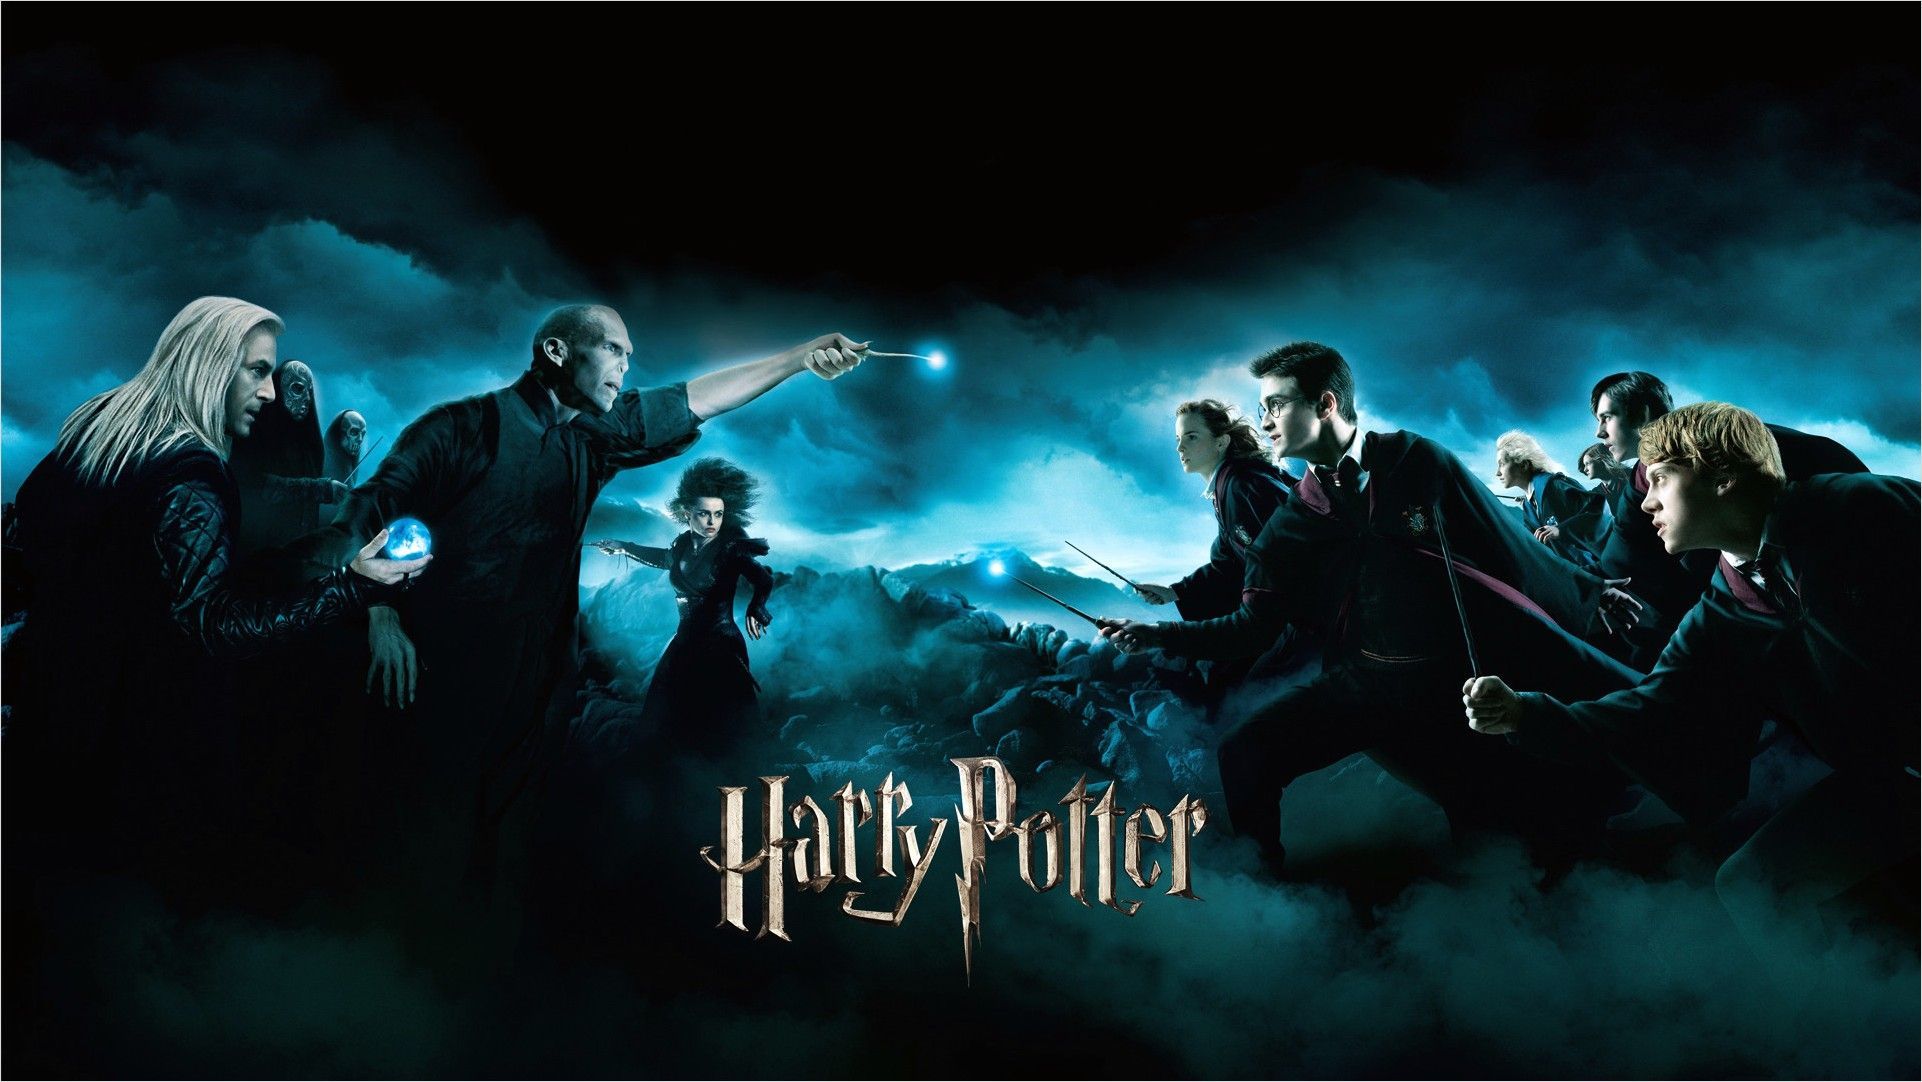 4k Harry Potter Wallpaper Smart Tv. Harry potter wallpaper, Harry potter rpg, Harry potter